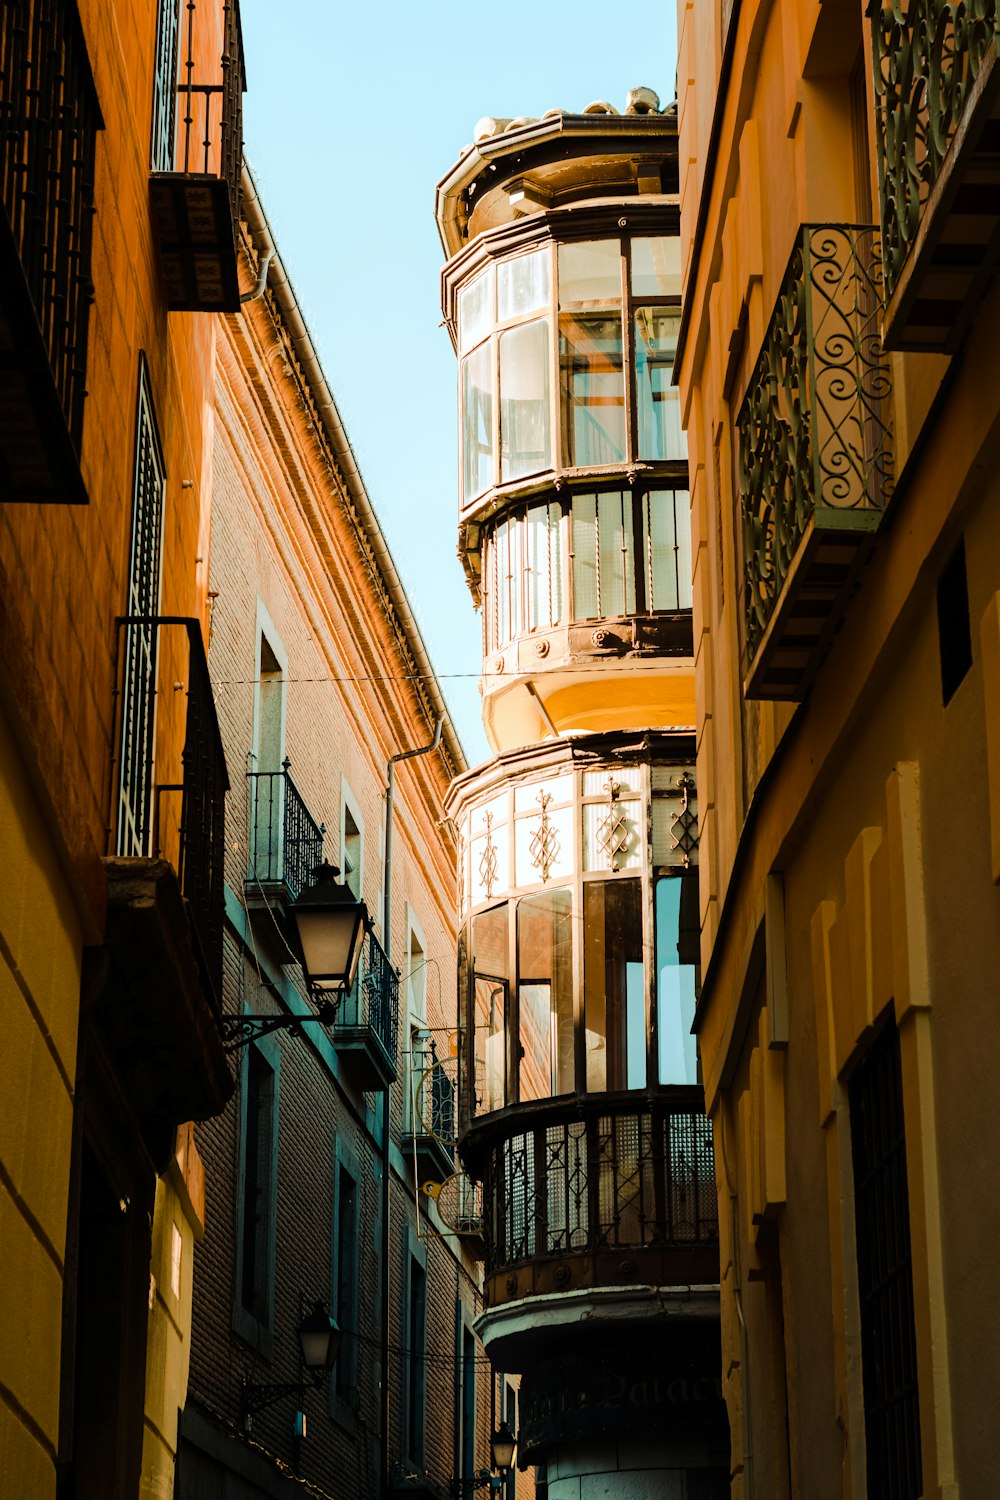 a narrow alleyway between two buildings with balconies